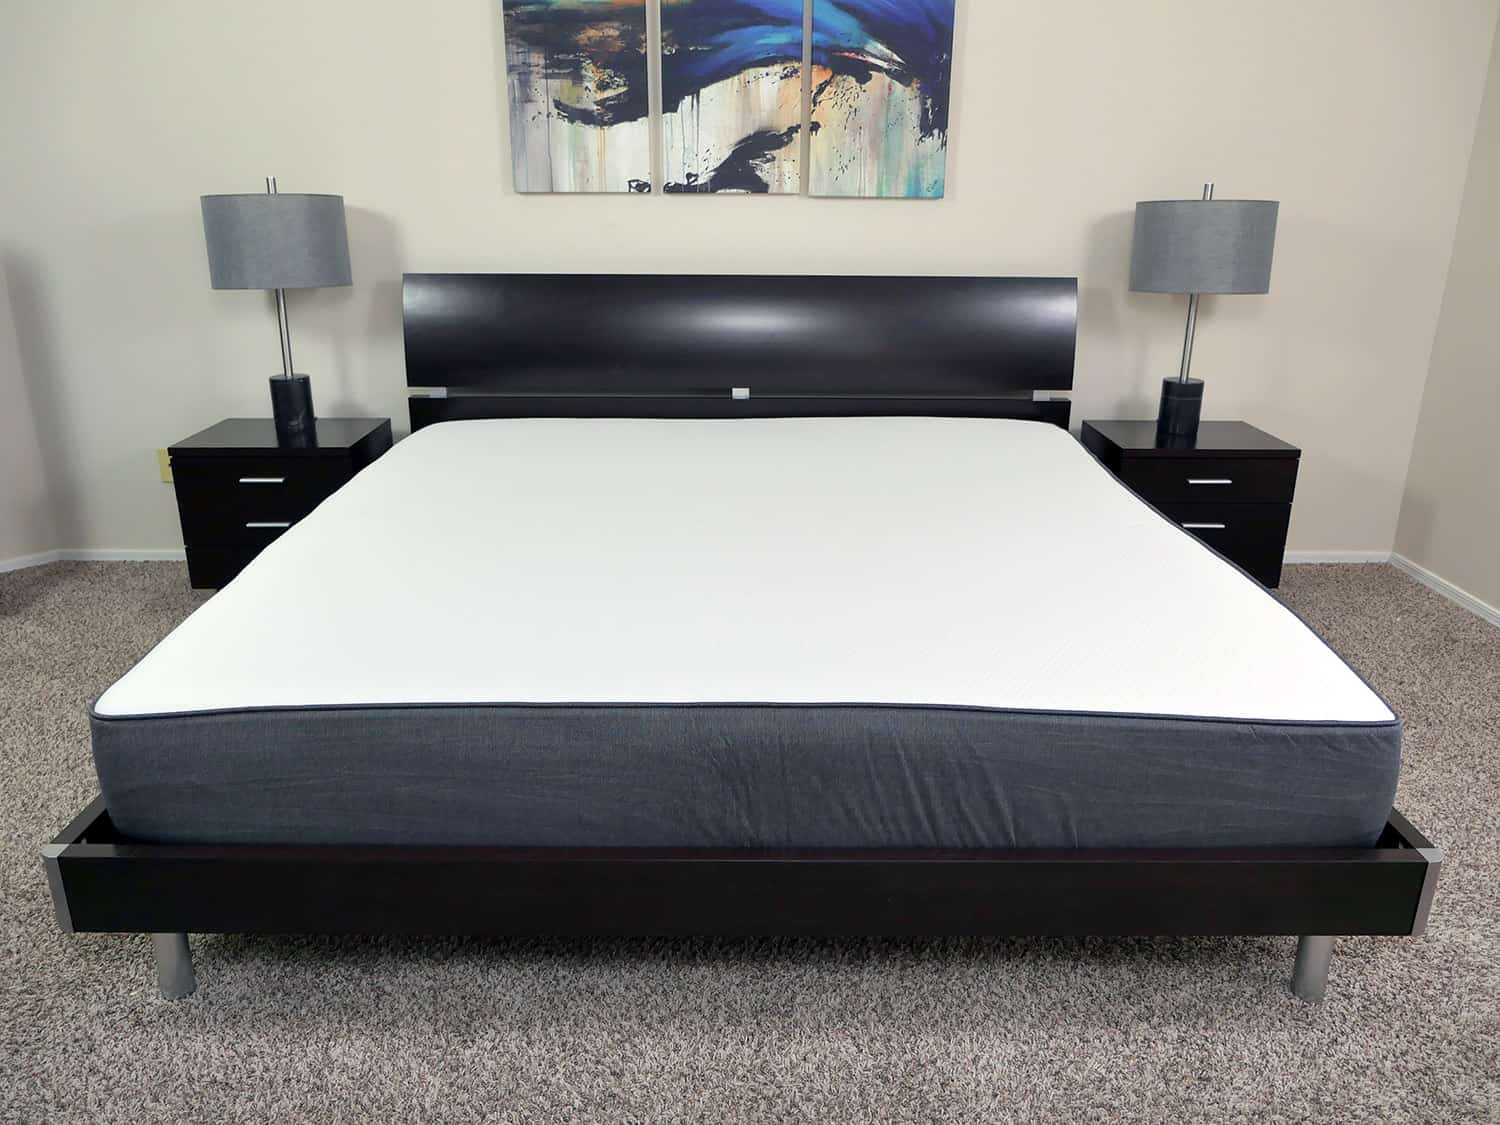 casper 8 inch mattress